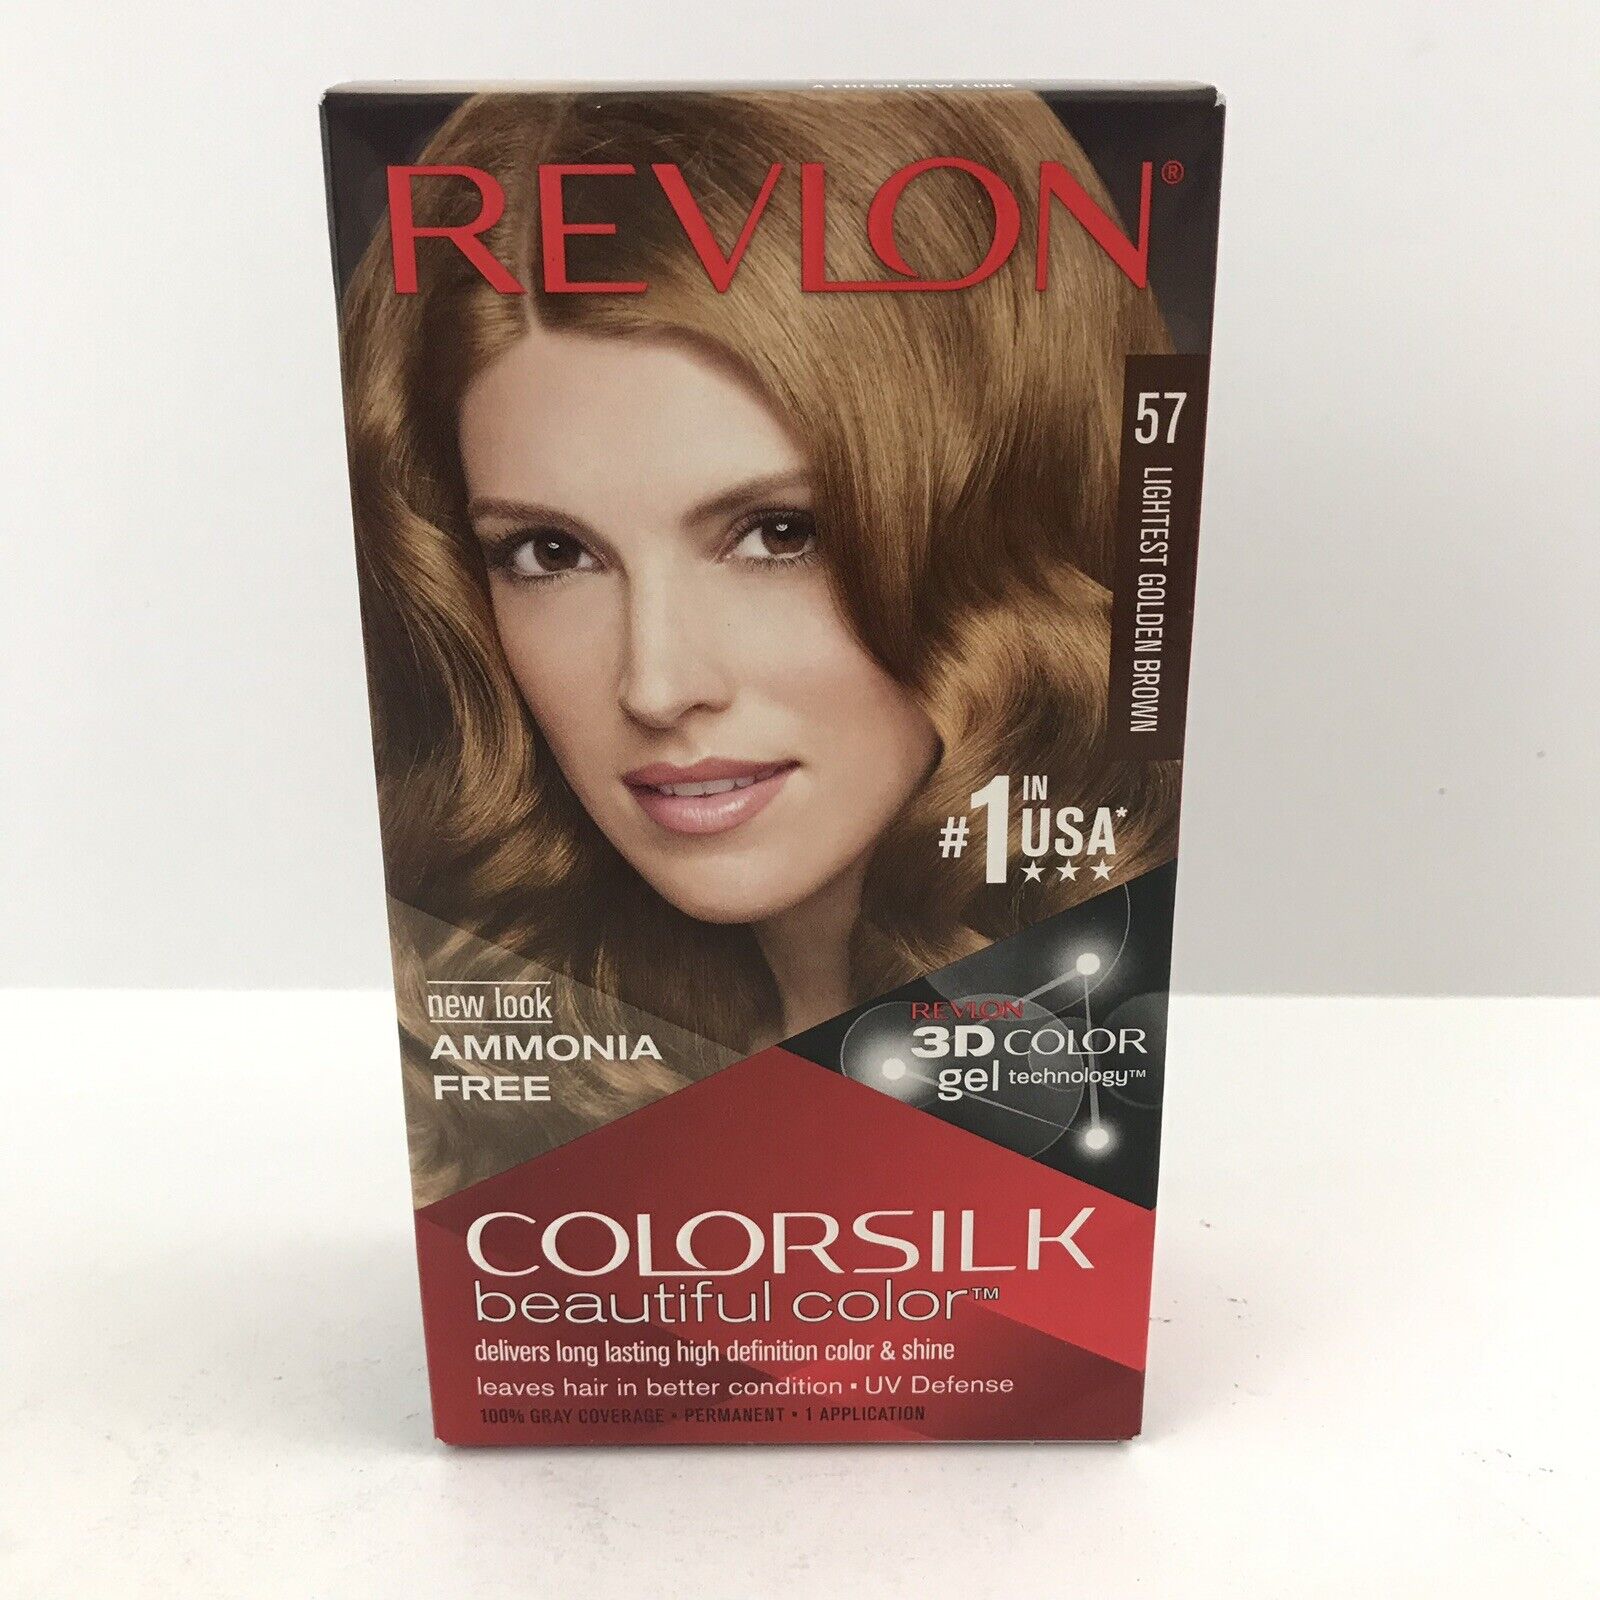 Revlon Colorsilk 57 Beautiful Color Lightest Golden Brown 1 Count New